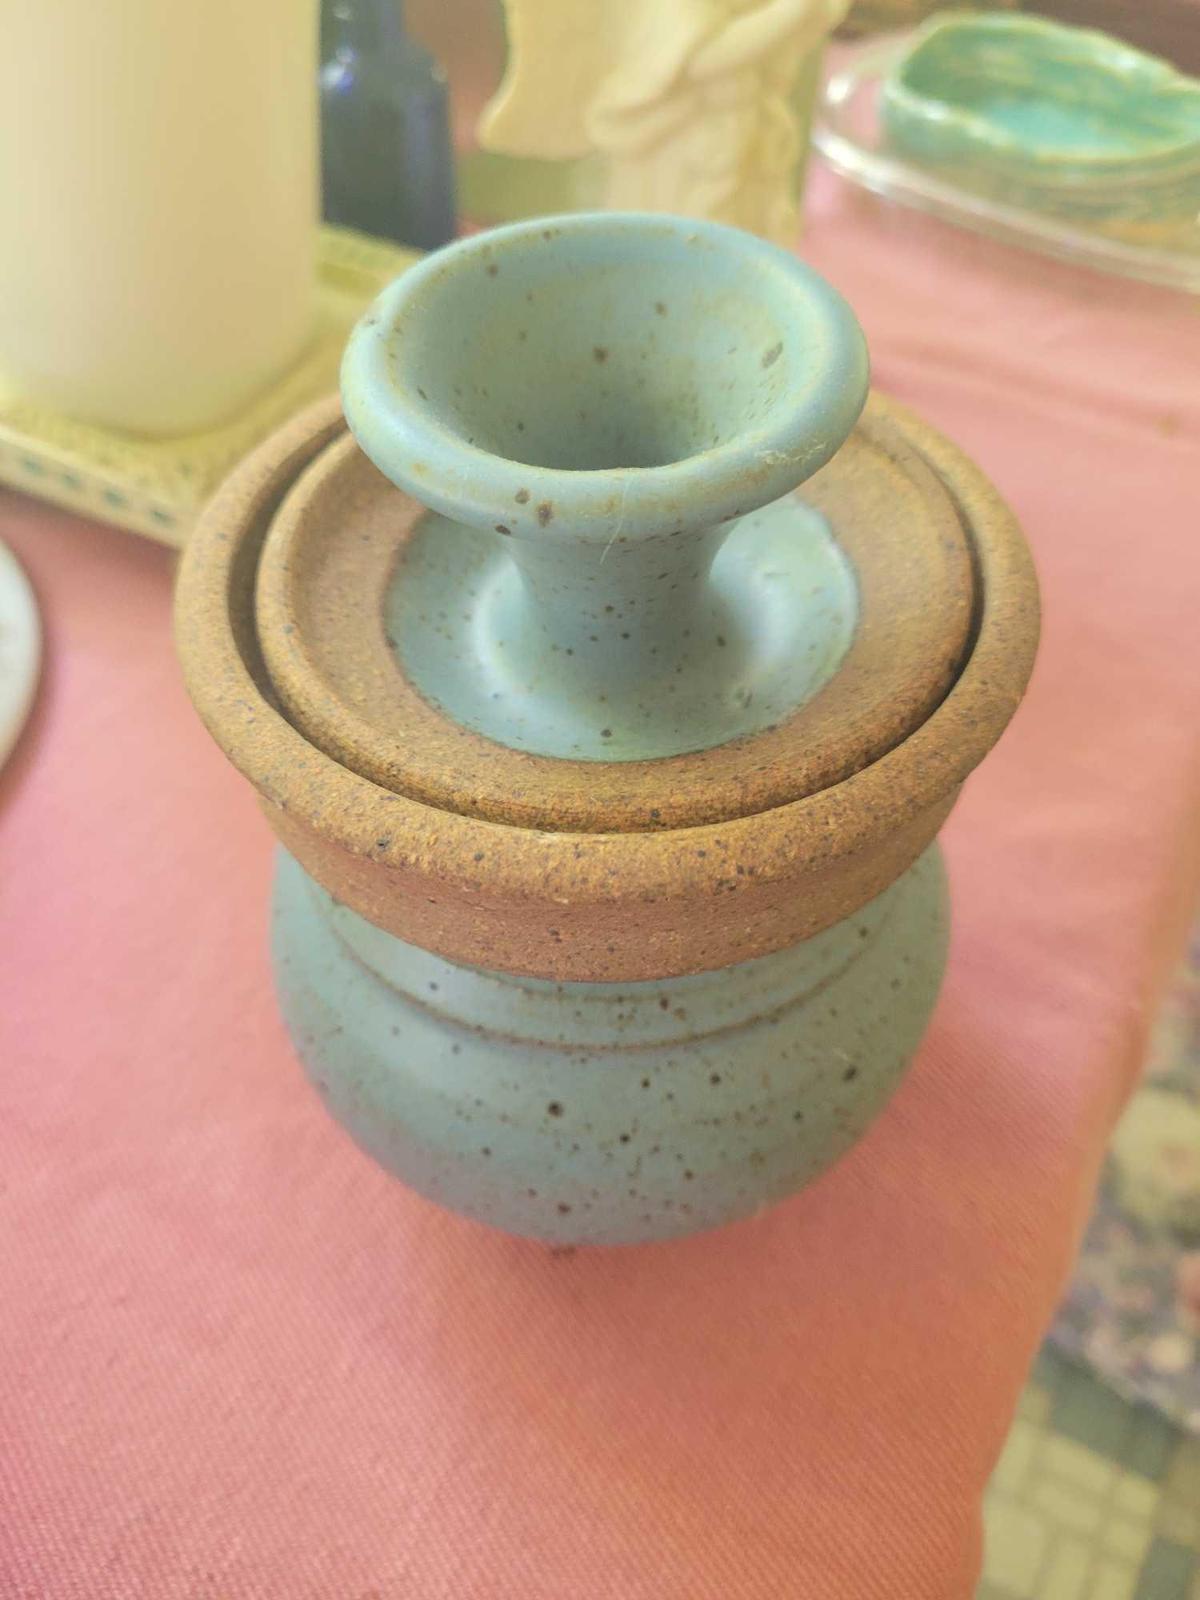 Ceramic Pot $1 STS